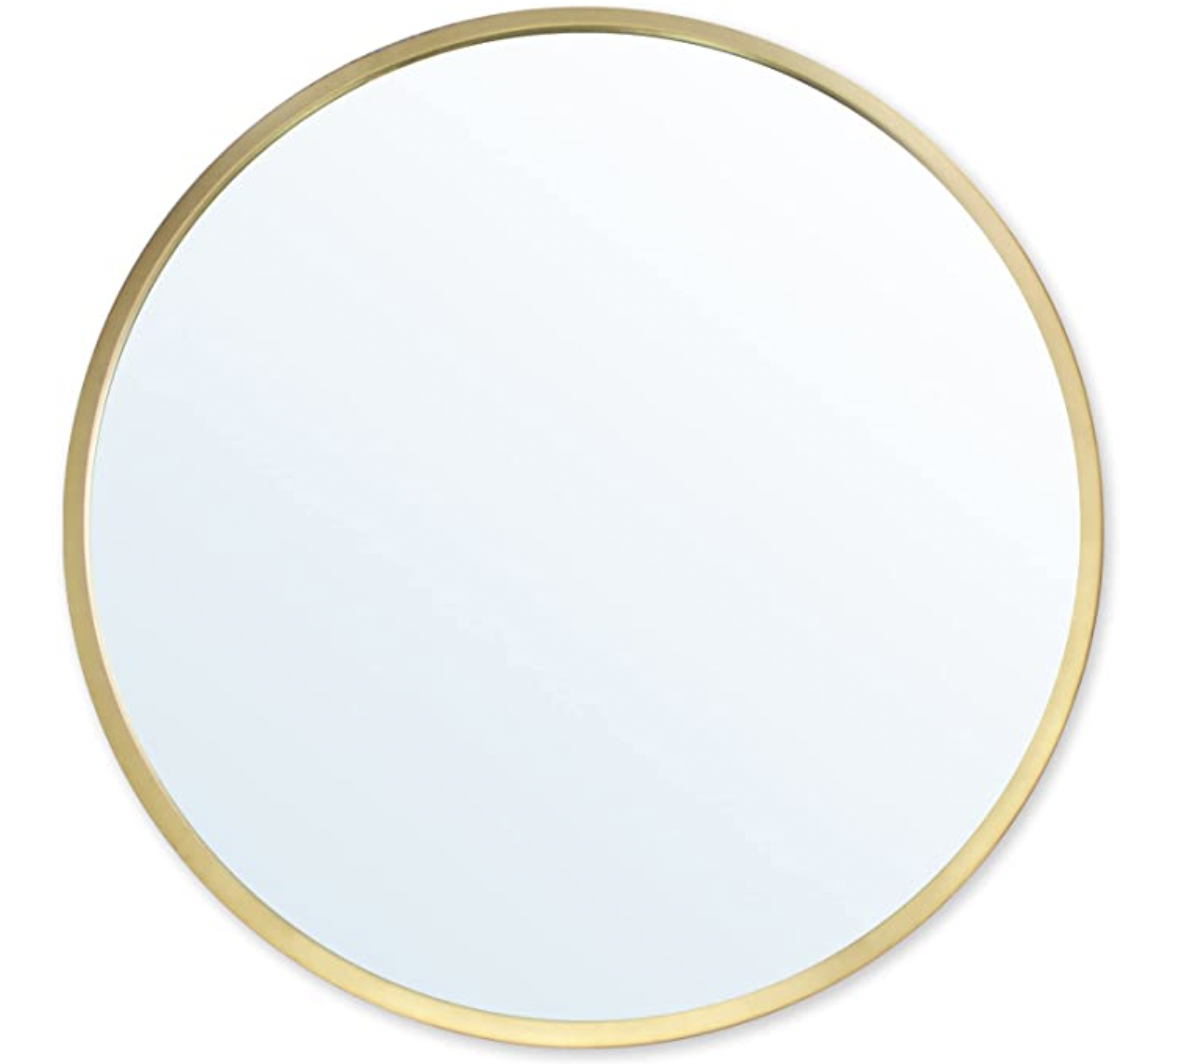 Round mirror with gold frame